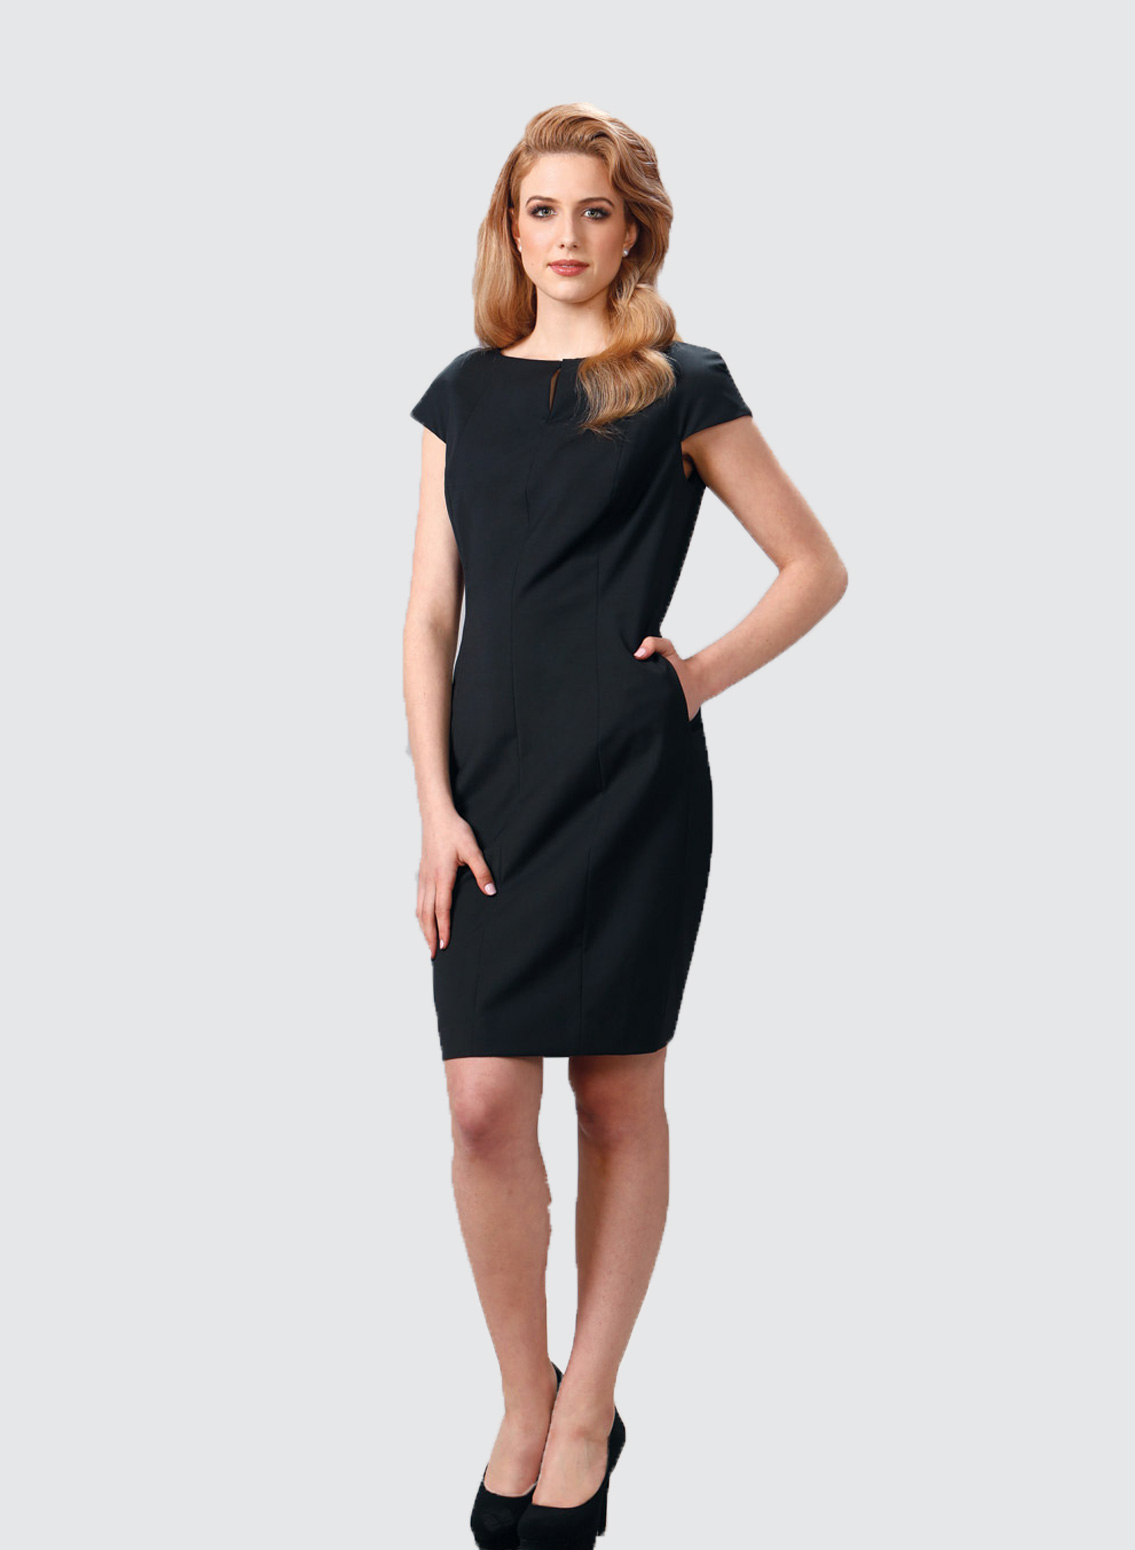 M9281 Ladies’ Wool Blend Stretch Cap Sleeve Dress